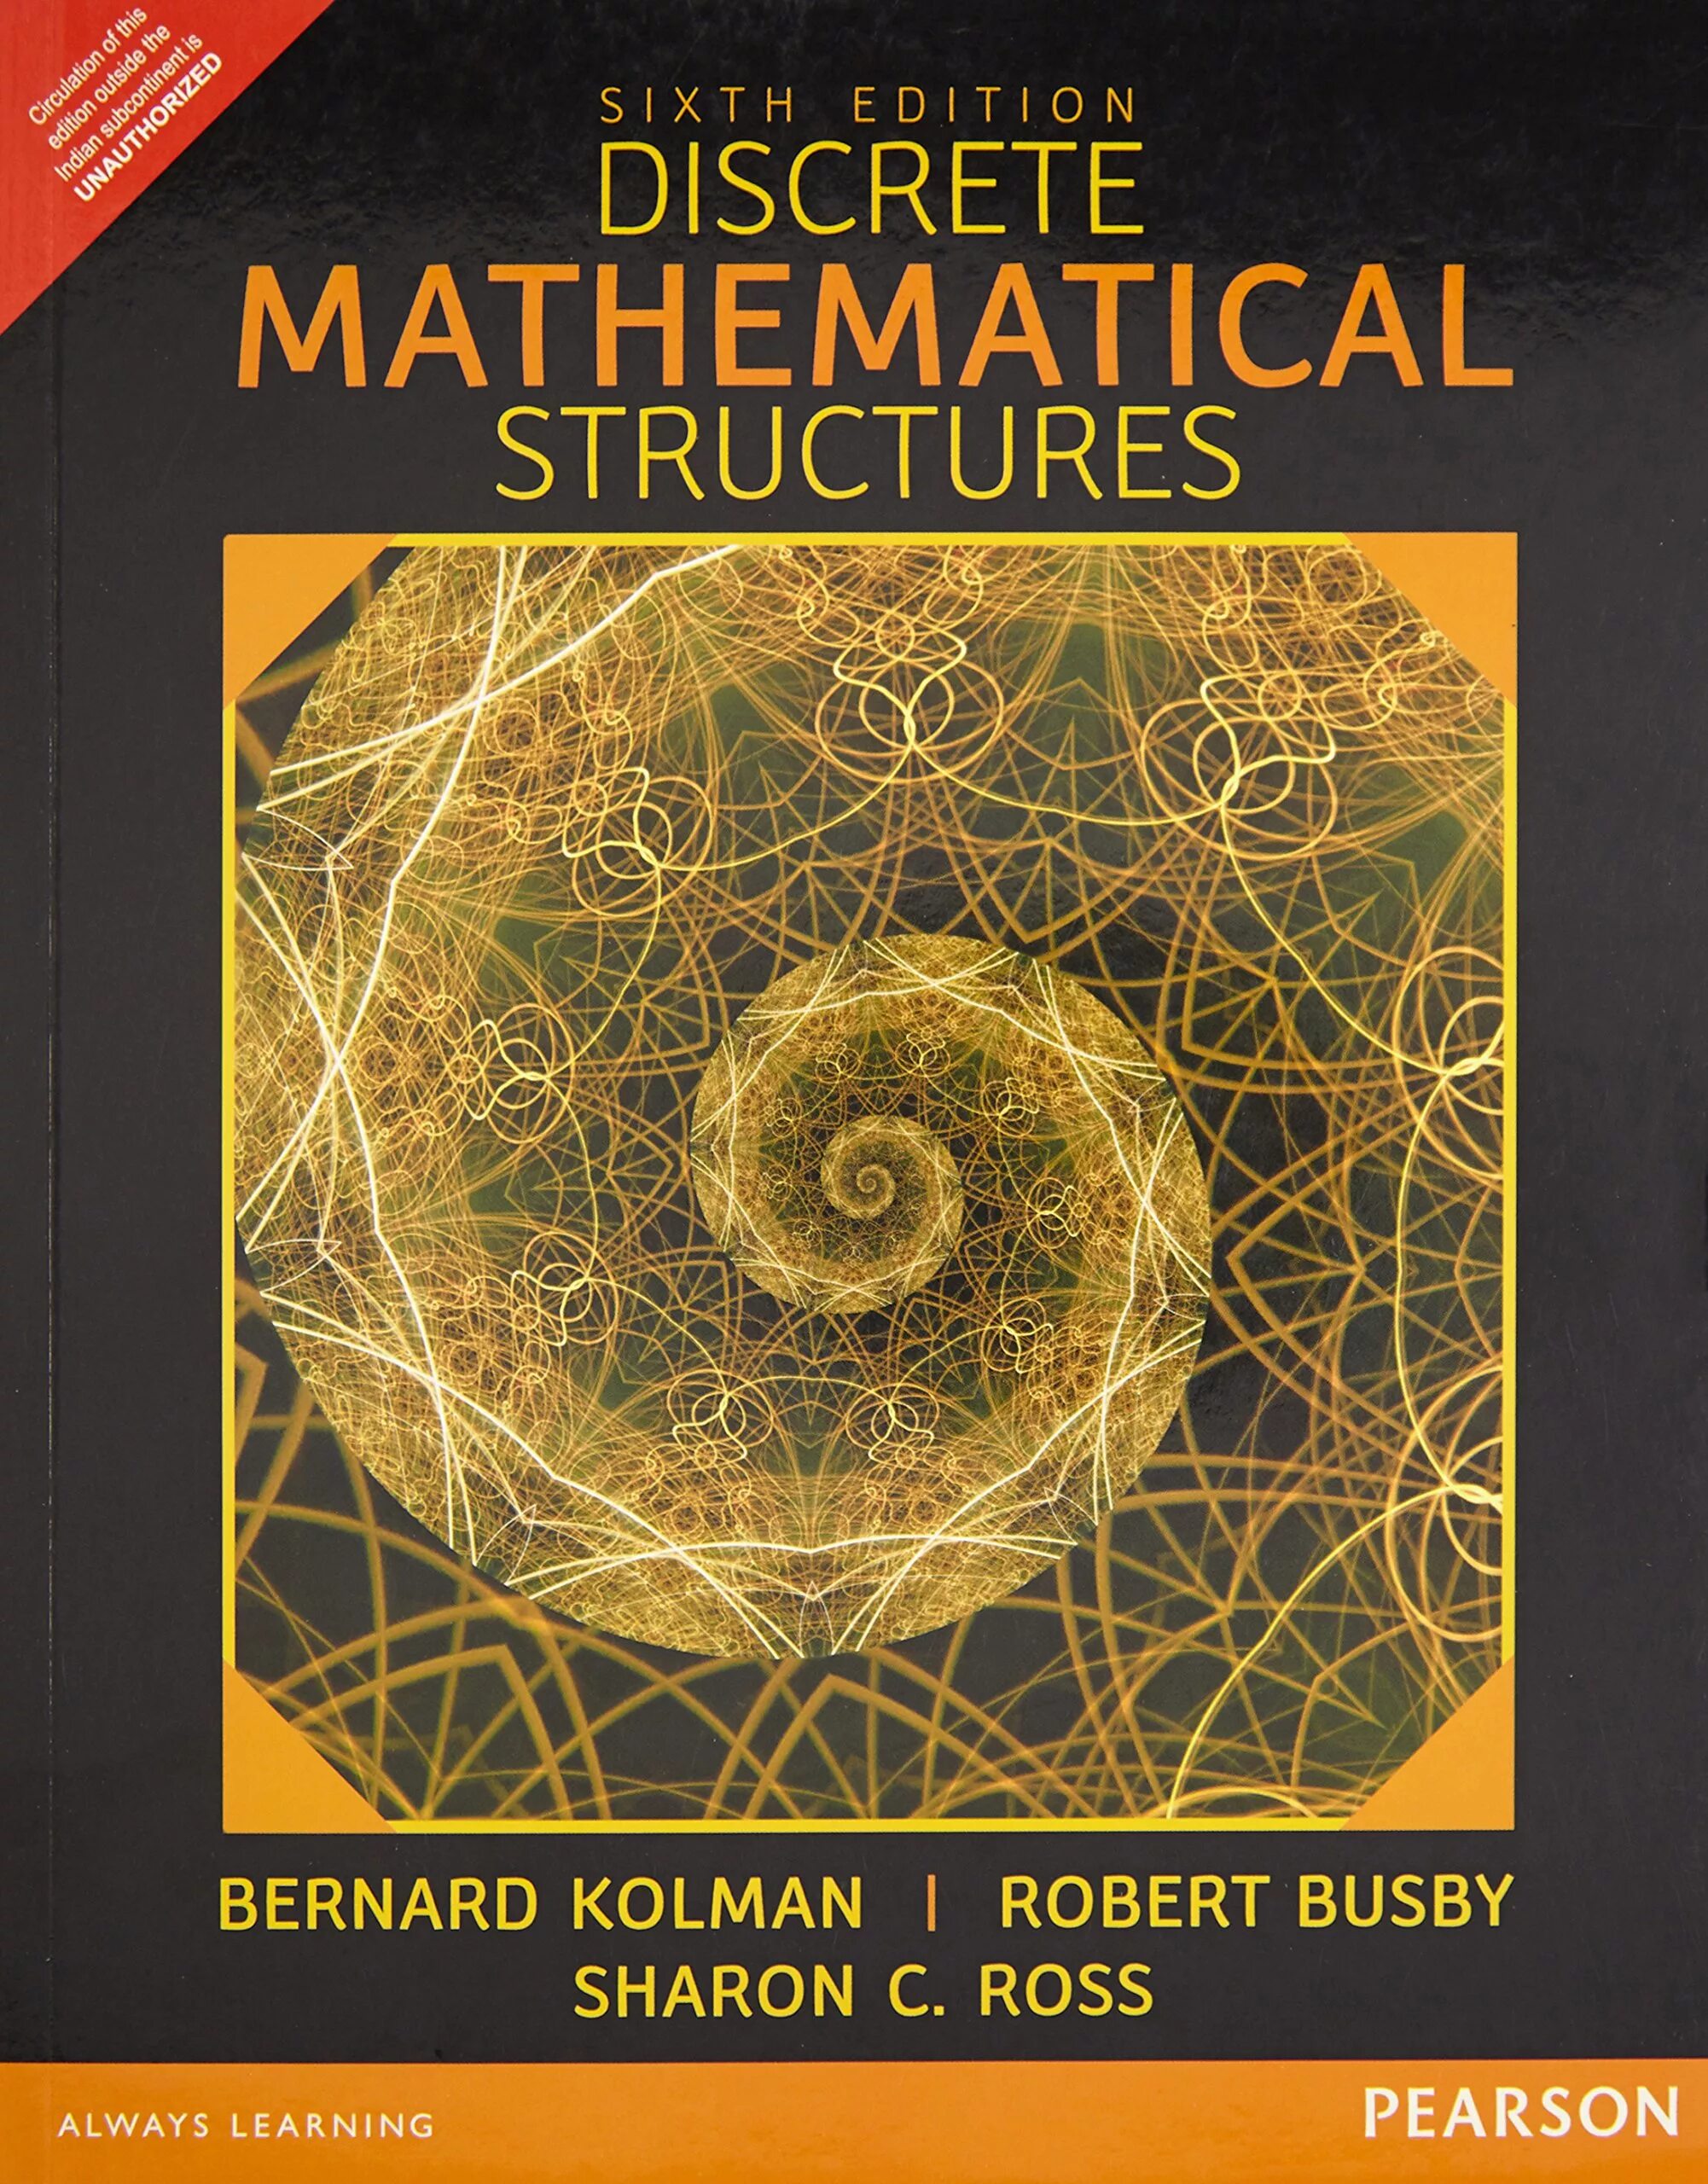 Discrete mathematics. Discrete structures. Discrete Mathematics book. Discrete Mathematics structures. Discrete Mathematical structures (fourth Edition).